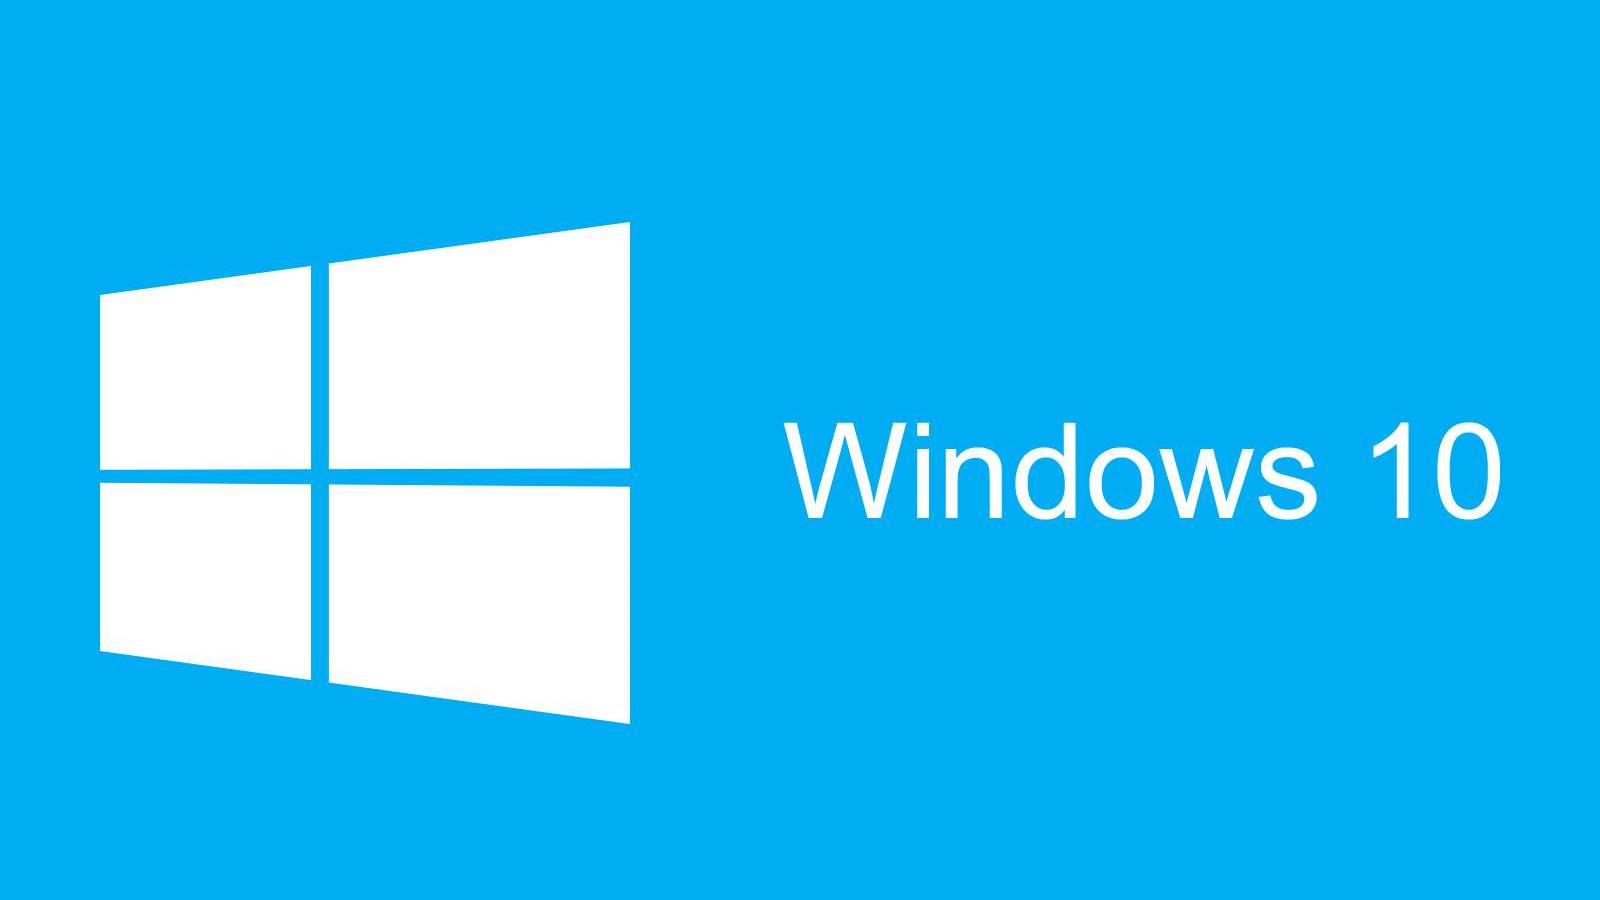 Windows 10 interese